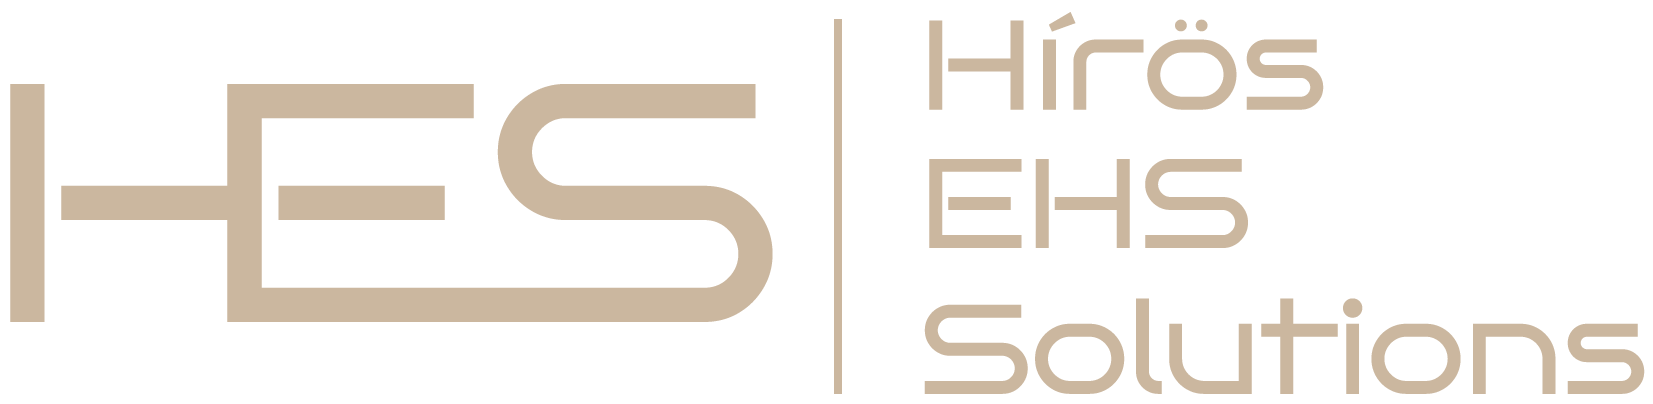 Hírös EHS Solutions logó